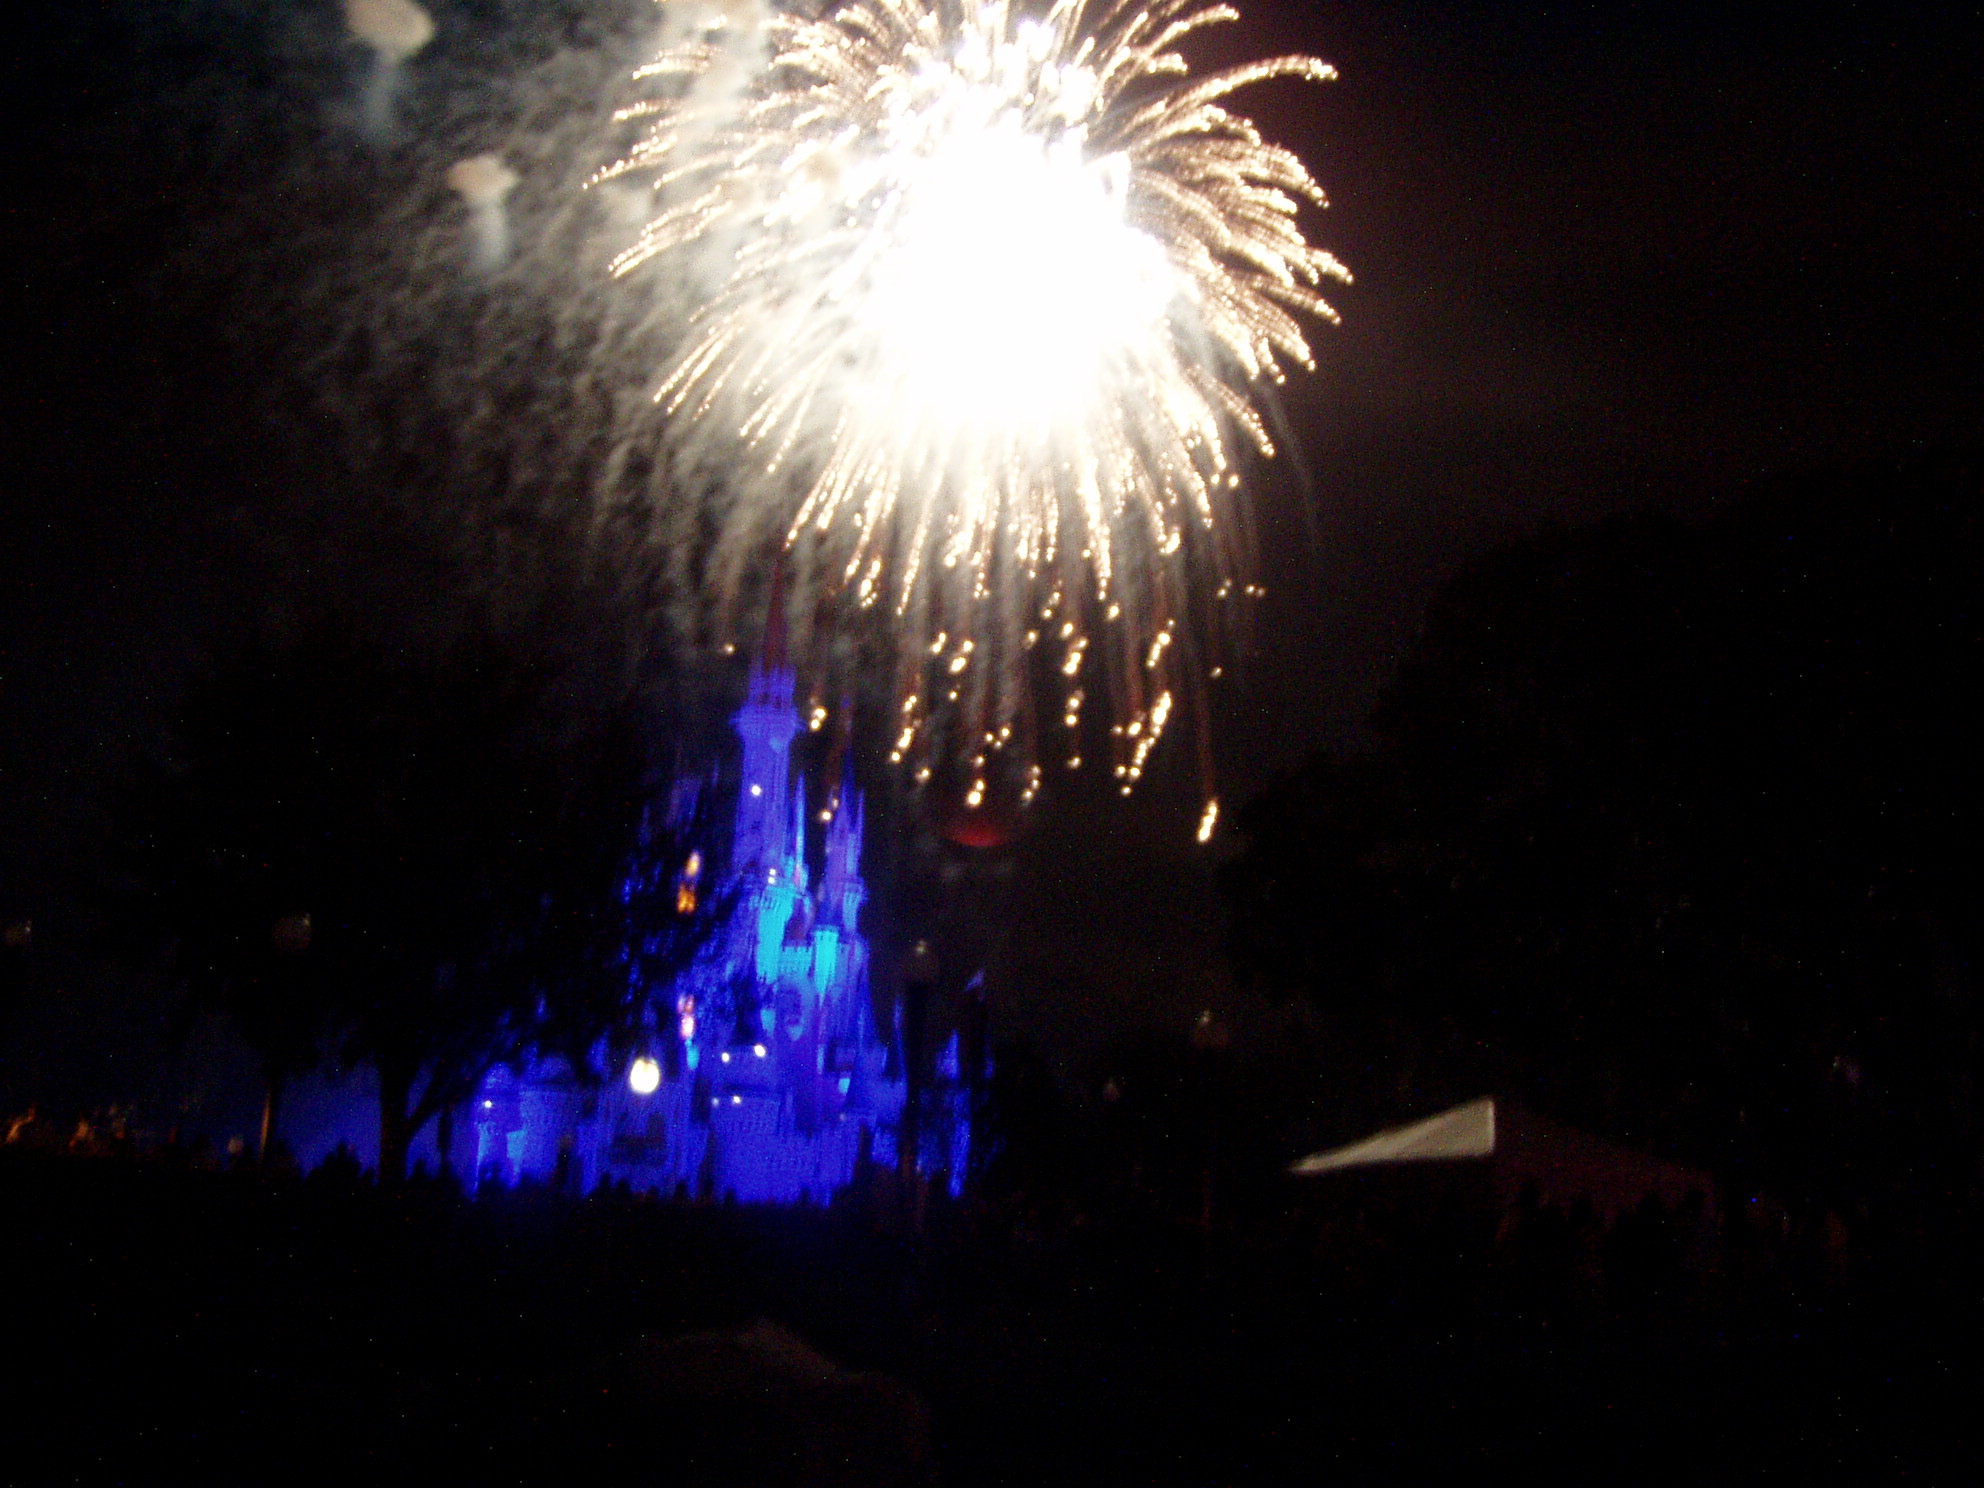 Magic Kingdom - Wishes Fireworks